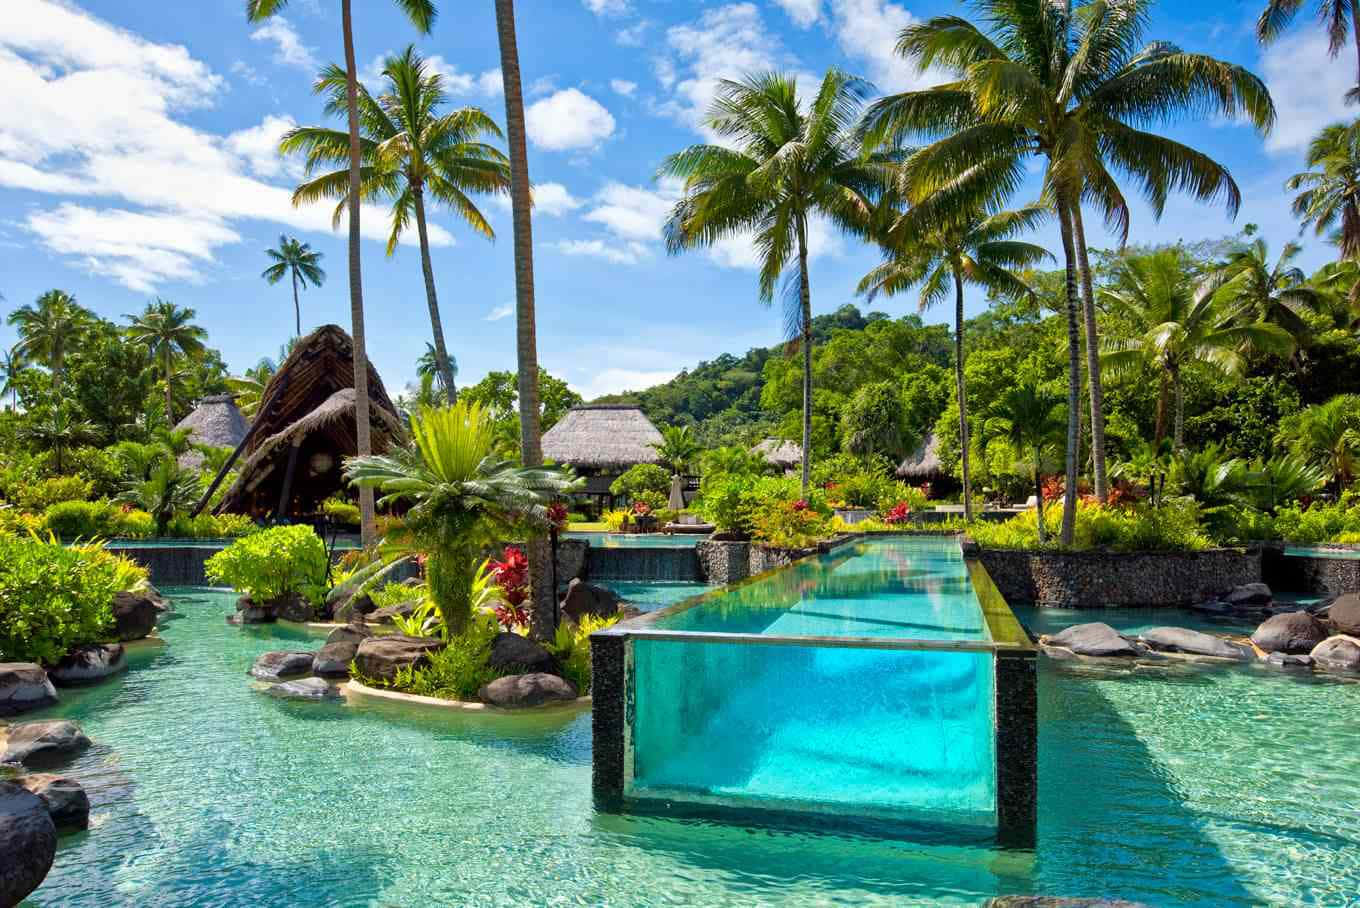 Imagende Un Lujoso Resort En La Isla De Fiji.